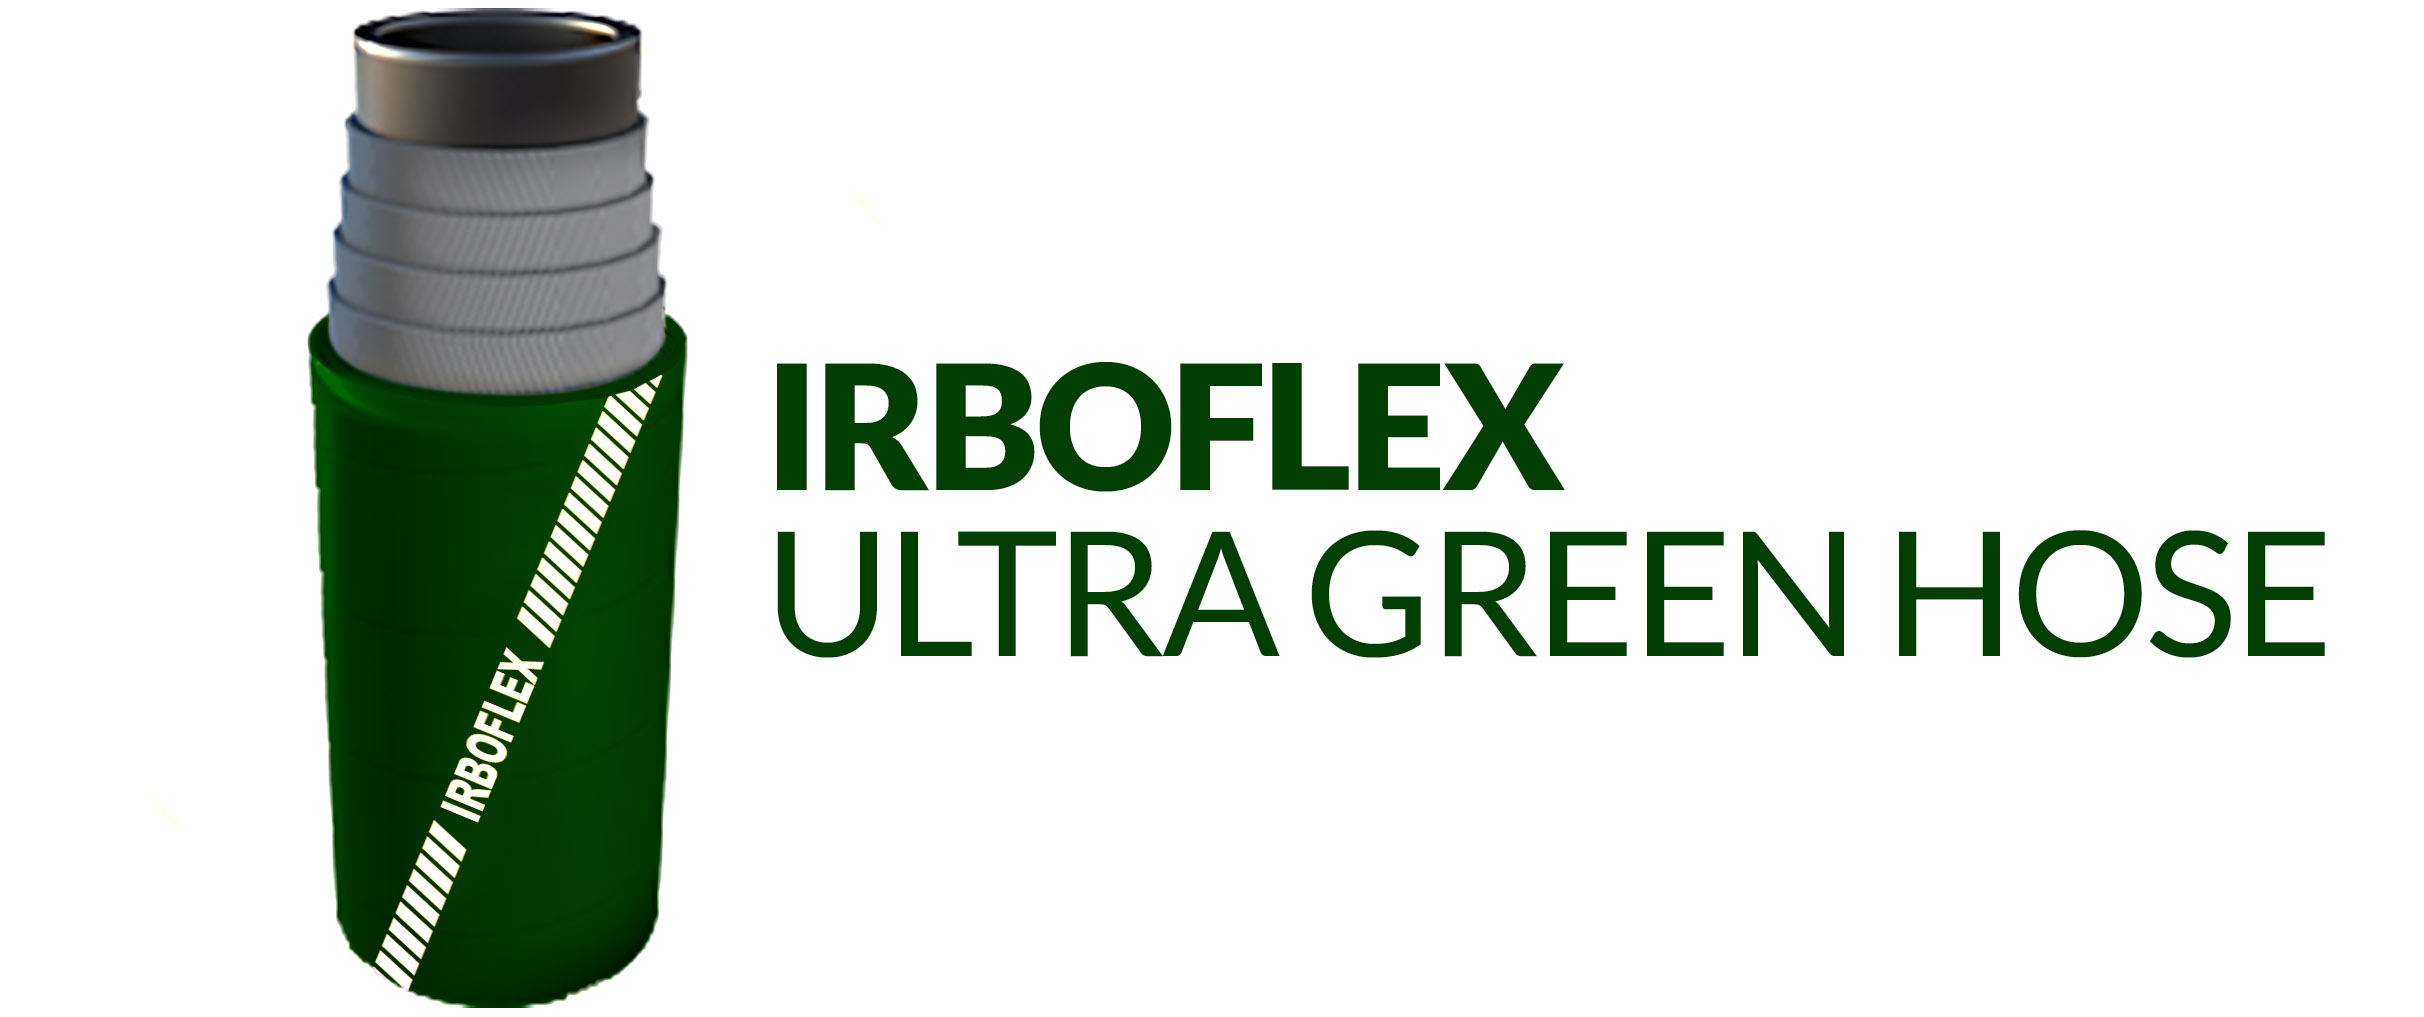 ultra-grenn-400-psi___-_irboflex-ultra-green-hose